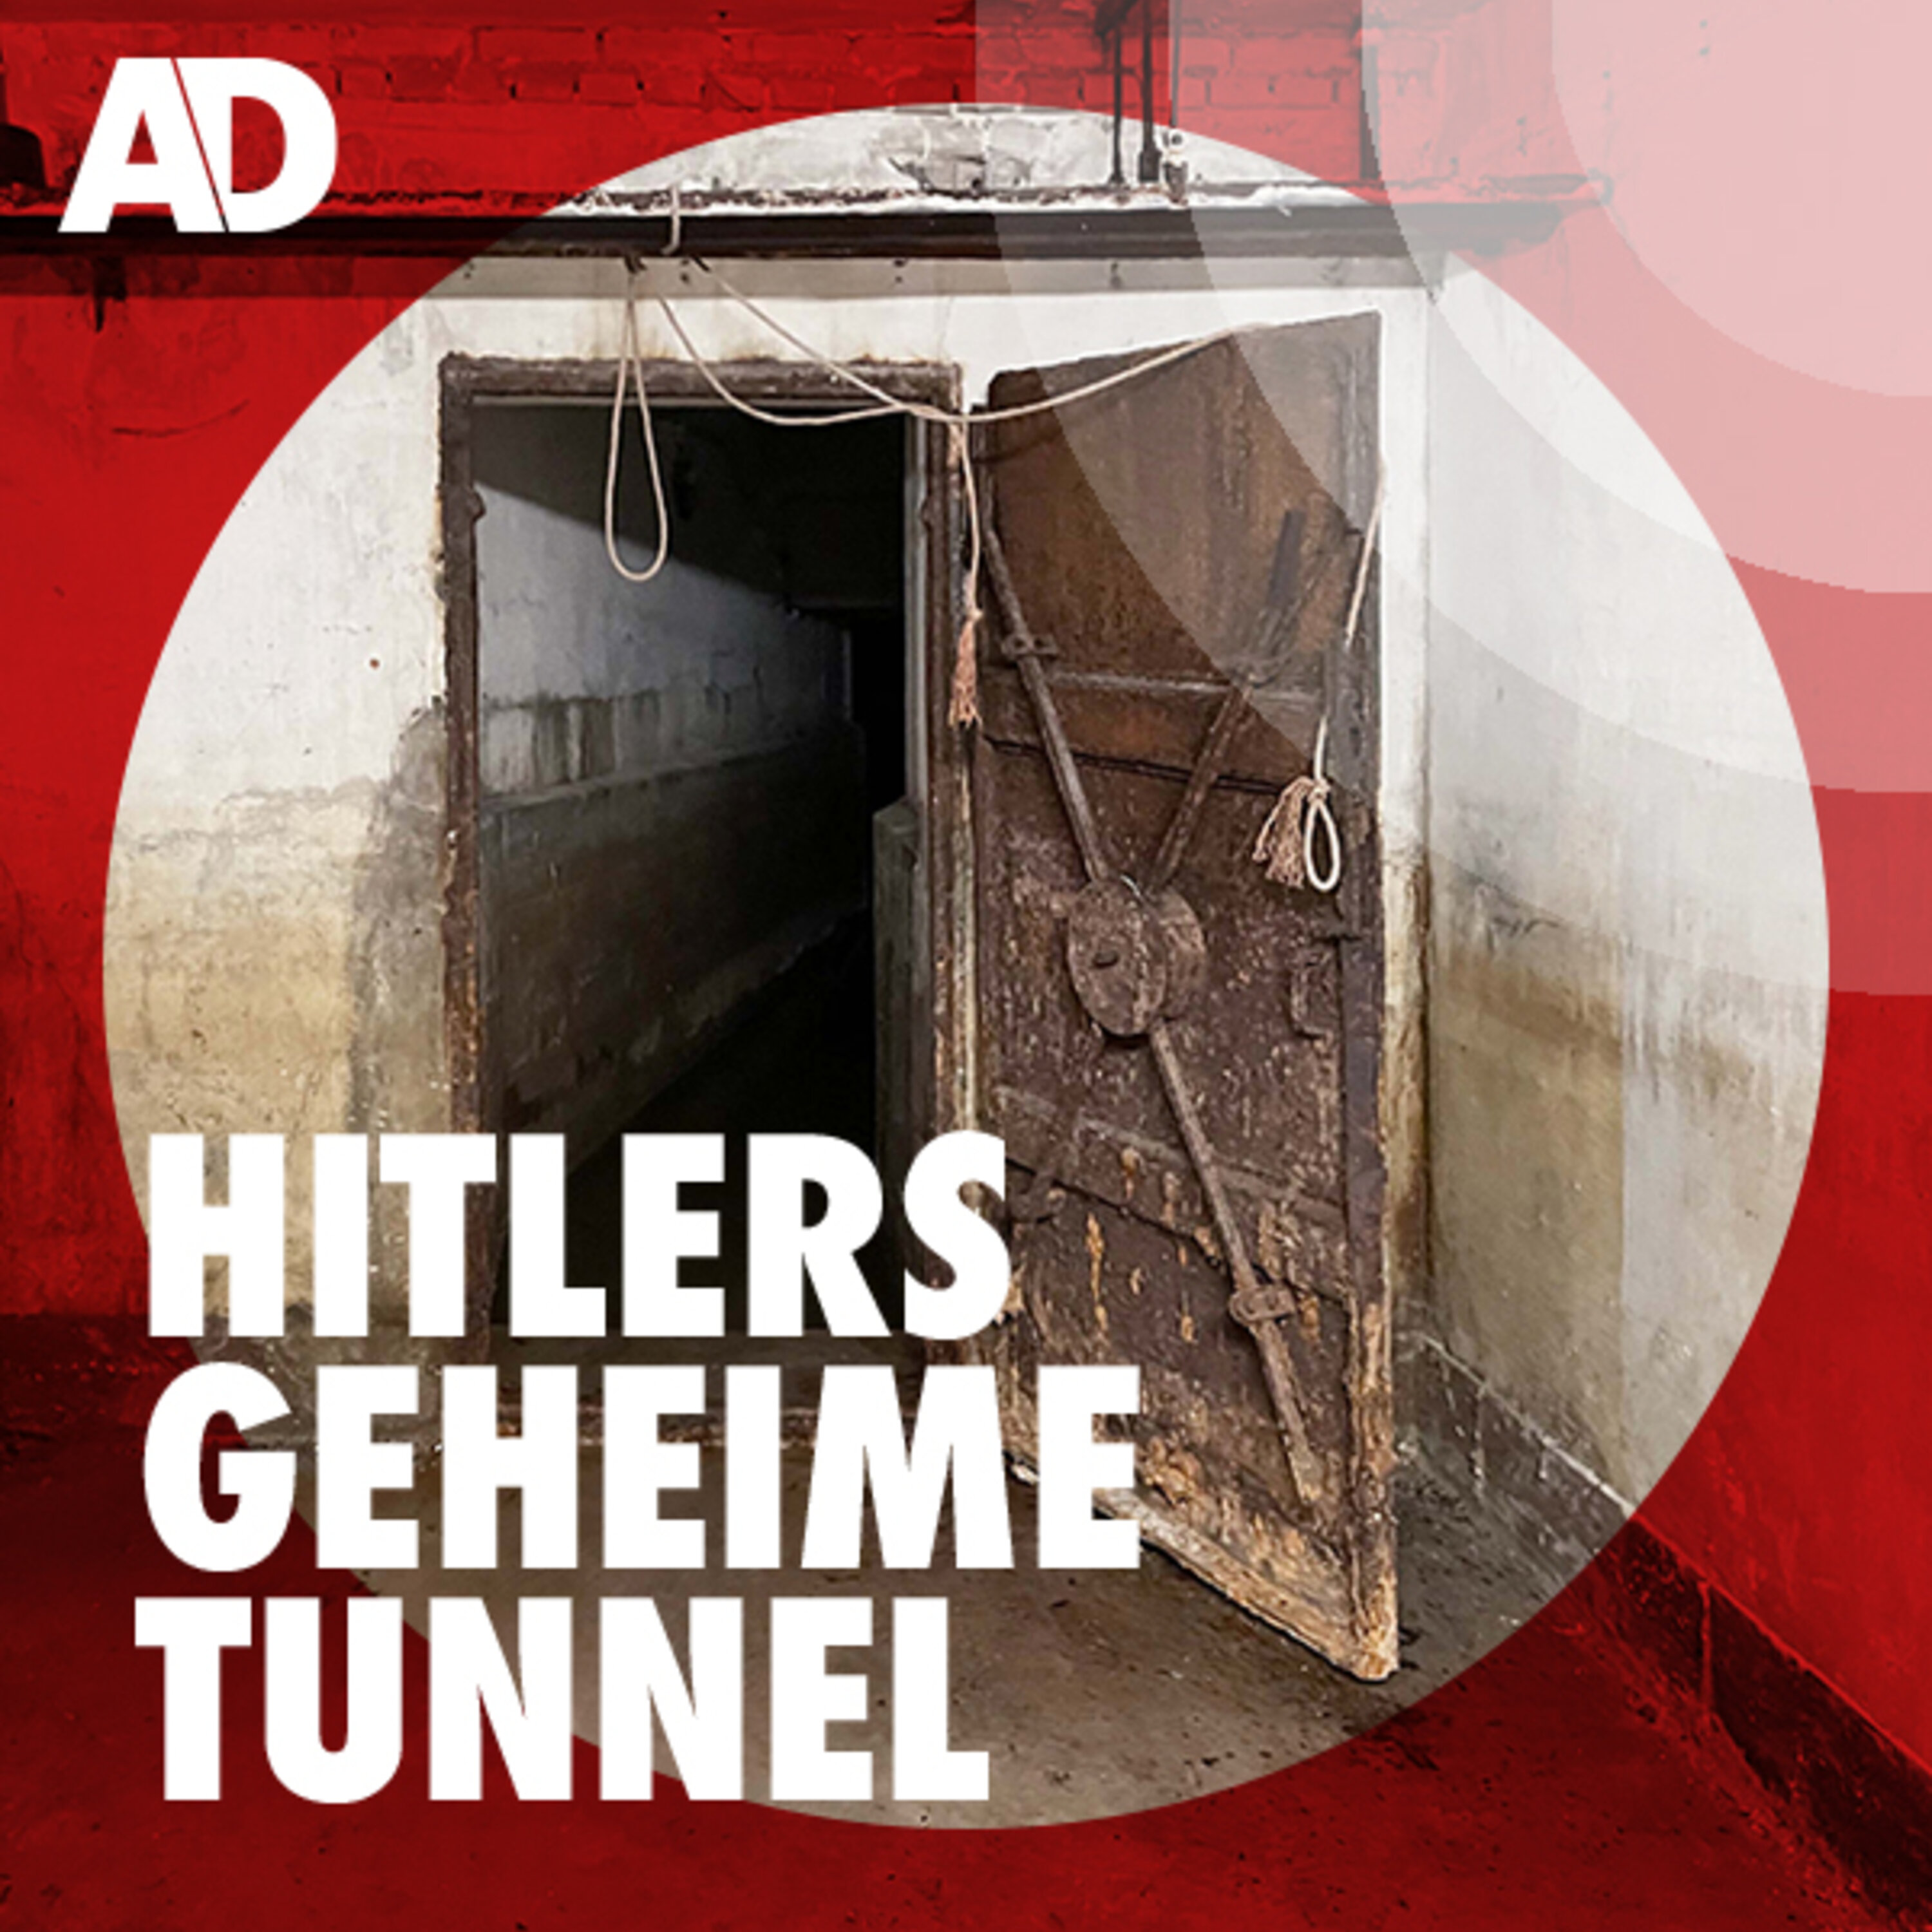 Hitlers geheime tunnel logo